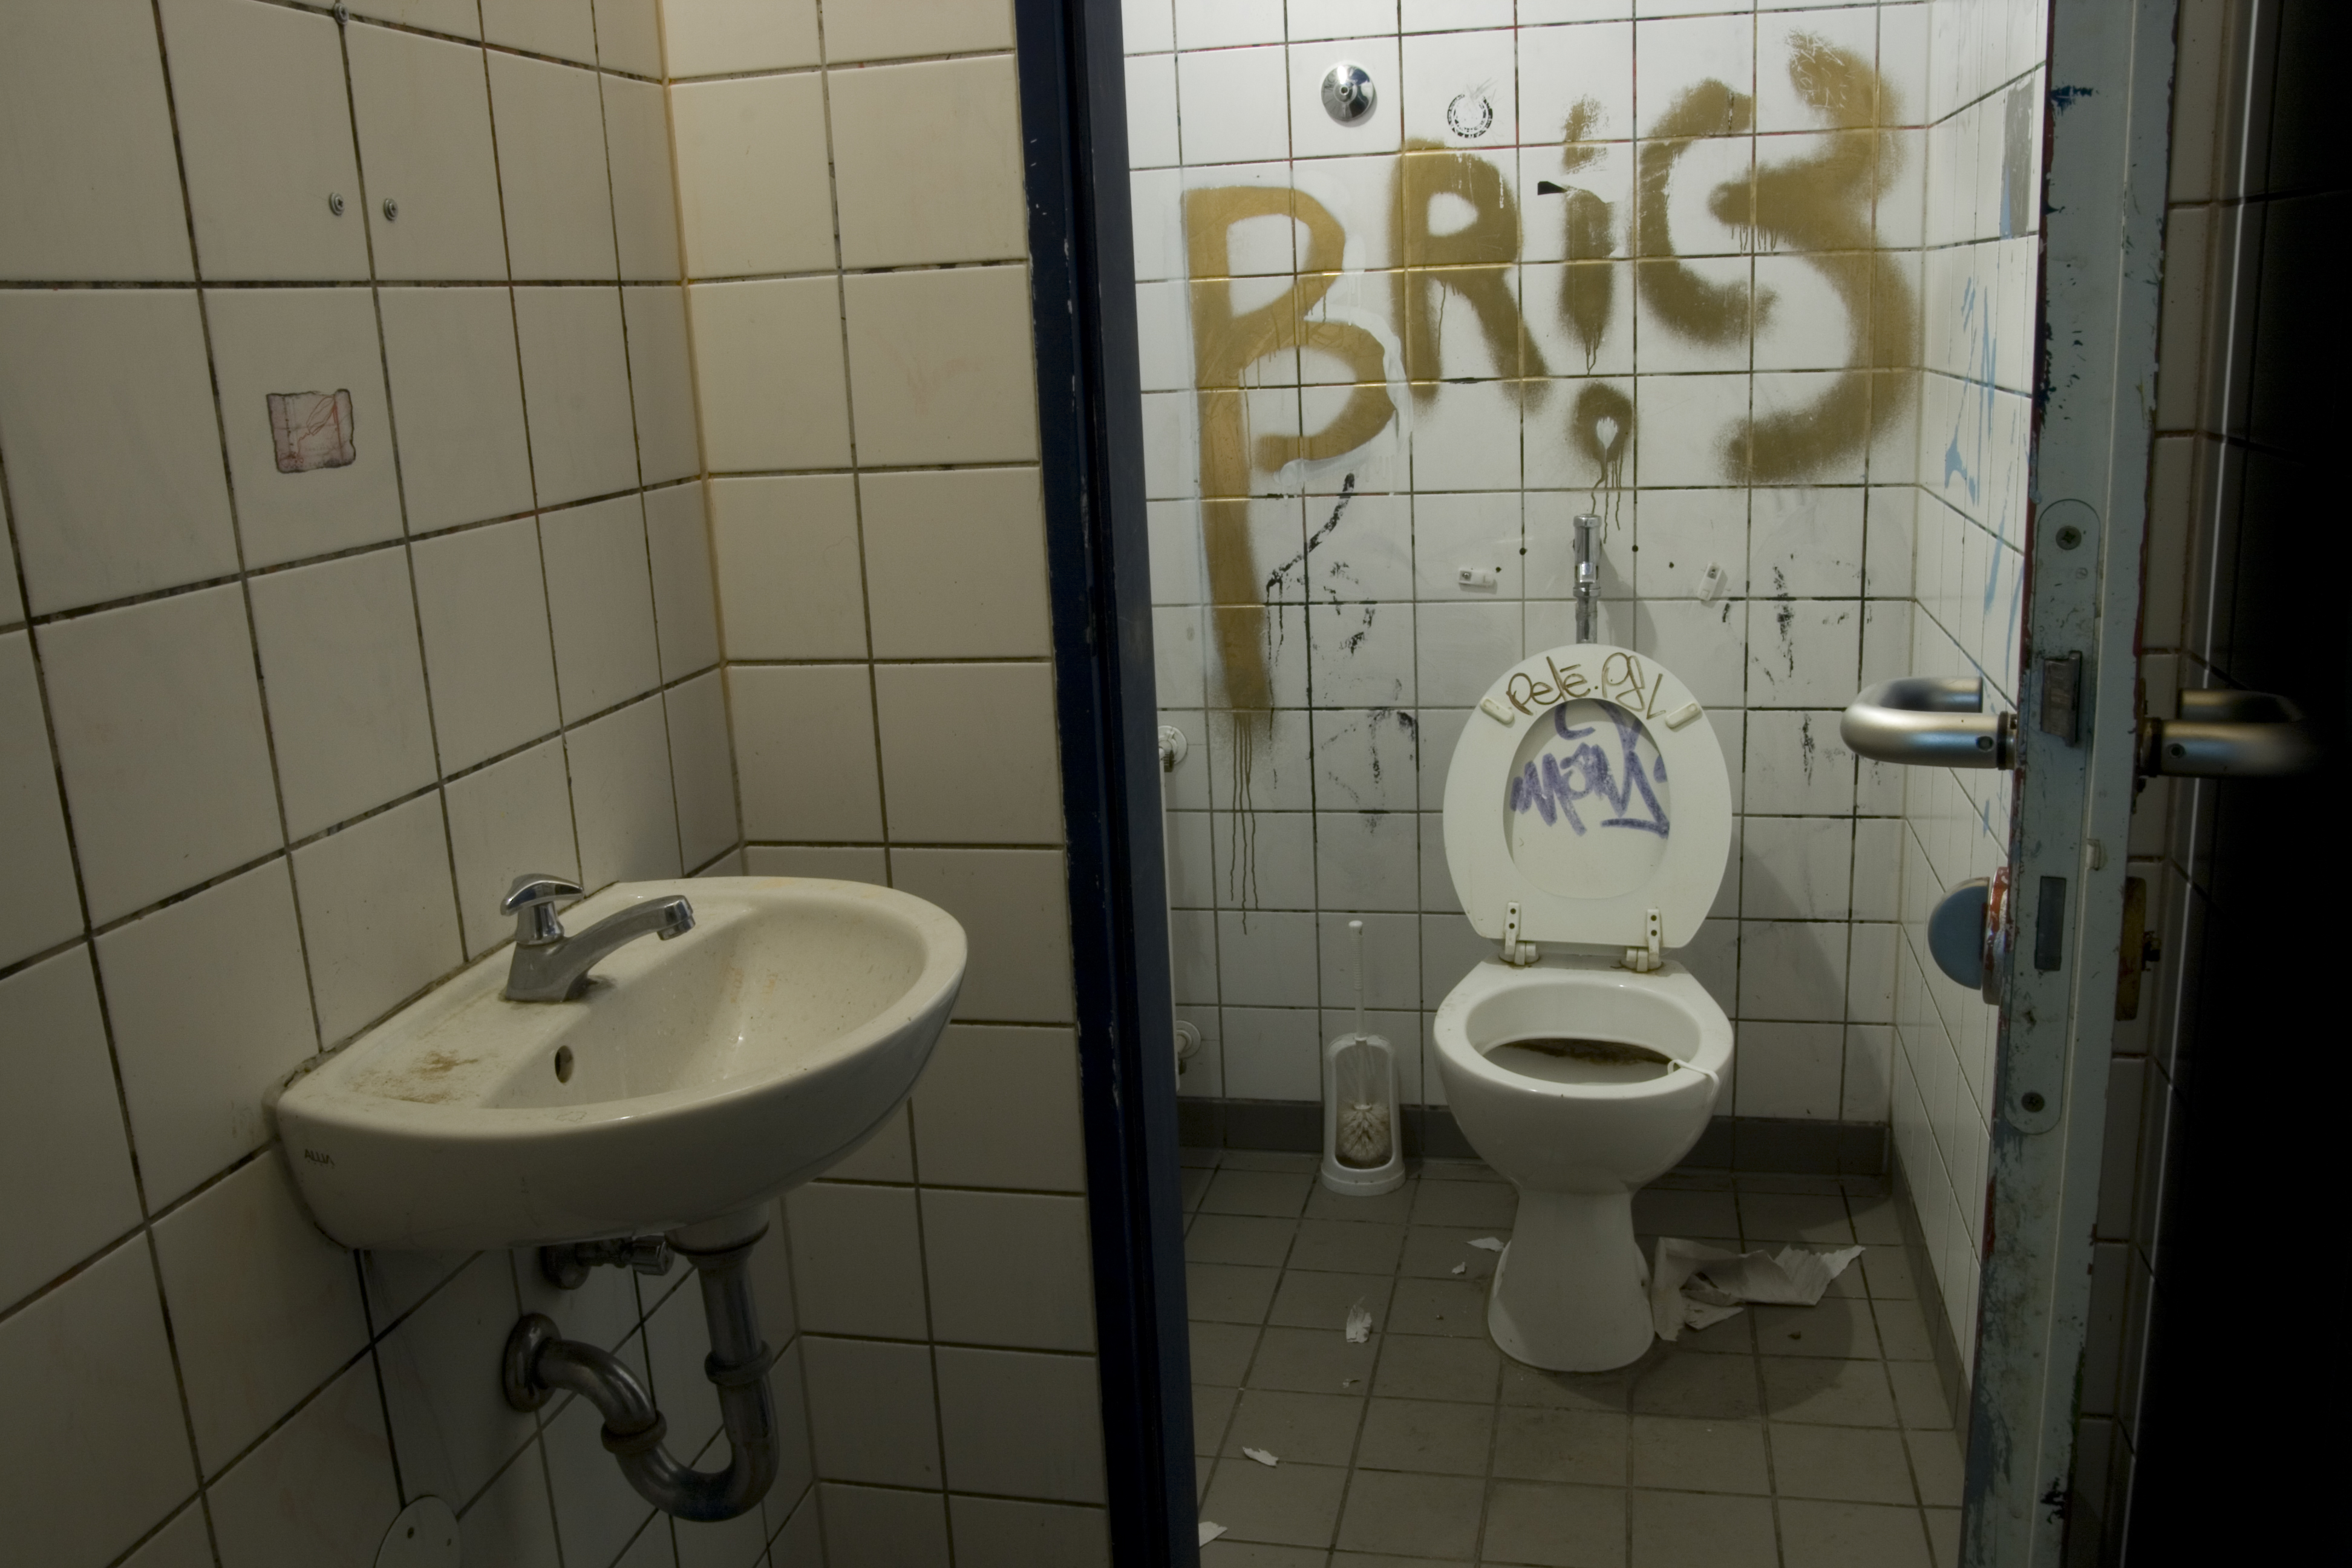 Bathroom Graffiti Porn - Whites Only' Graffiti in Texas School Bathroom Sparks Investigation